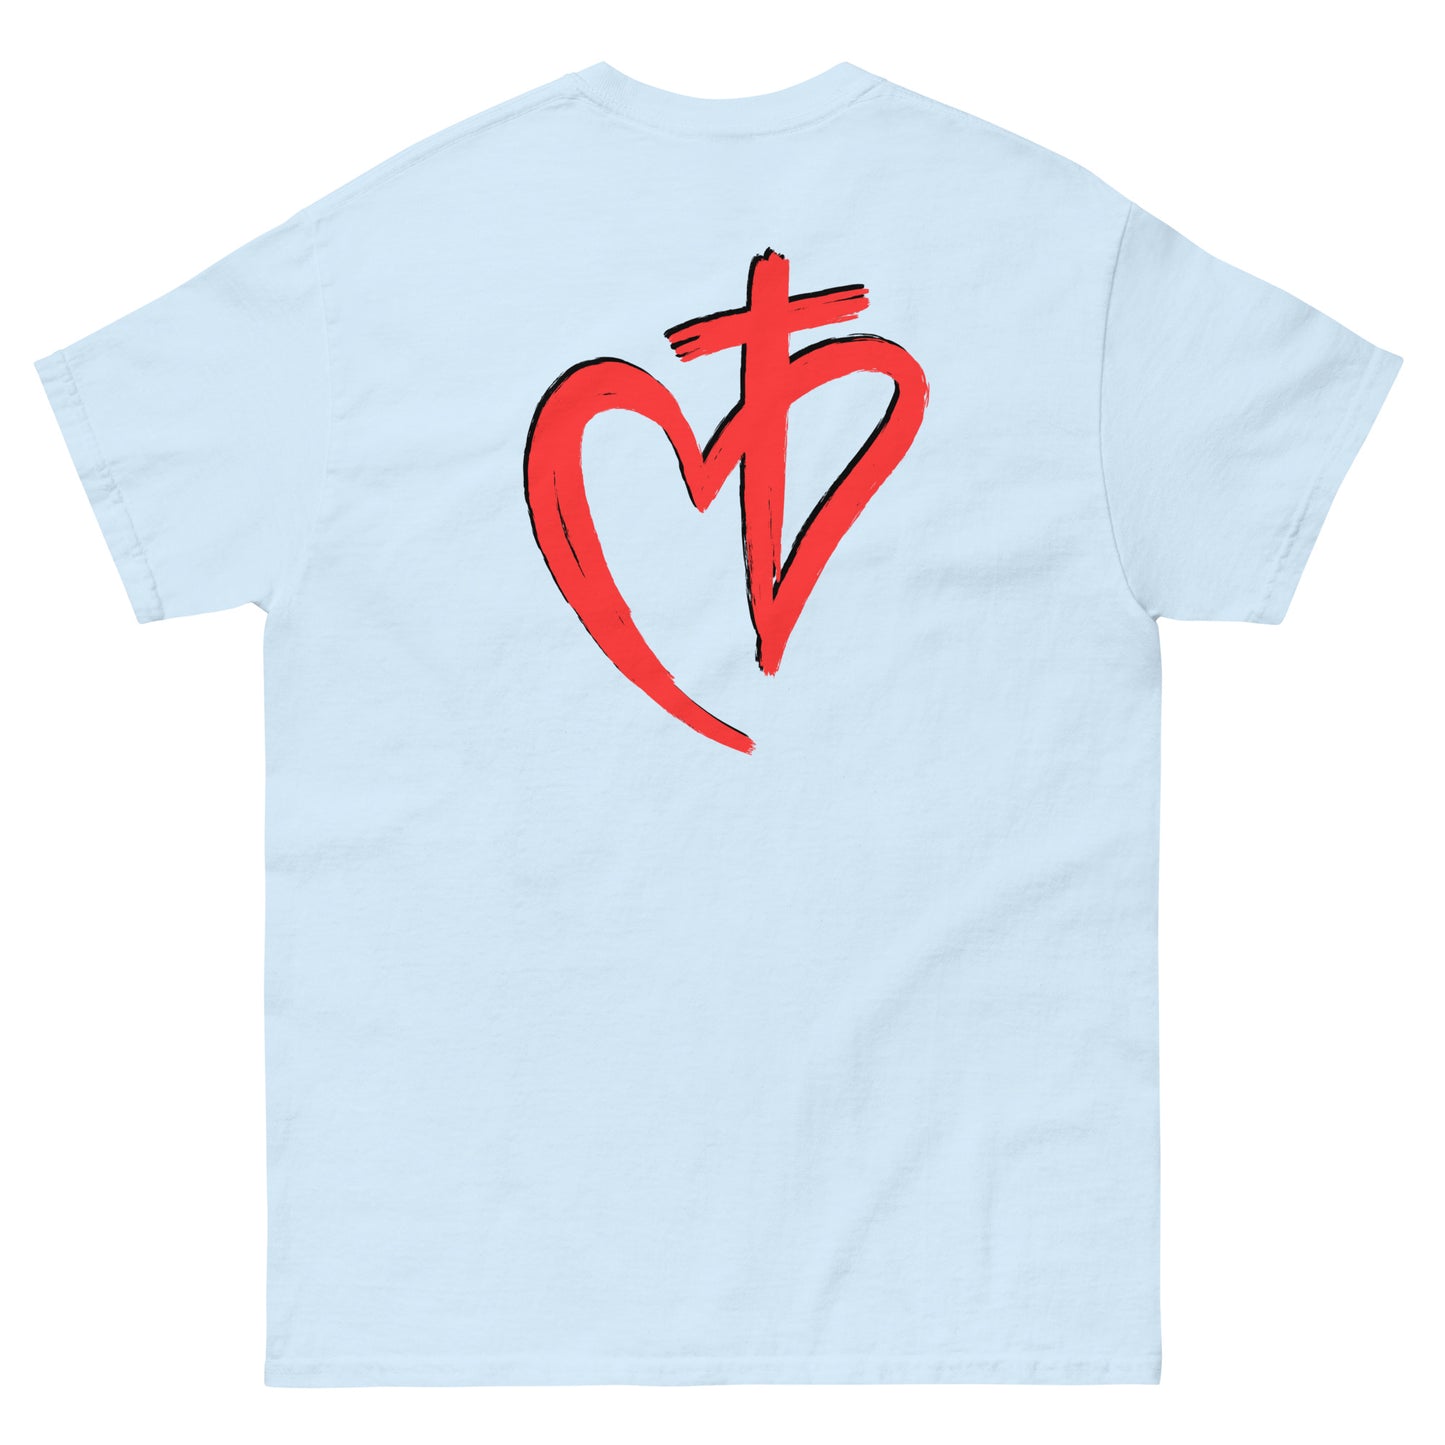 0-A-00 Jesus Cross Heart classic tee